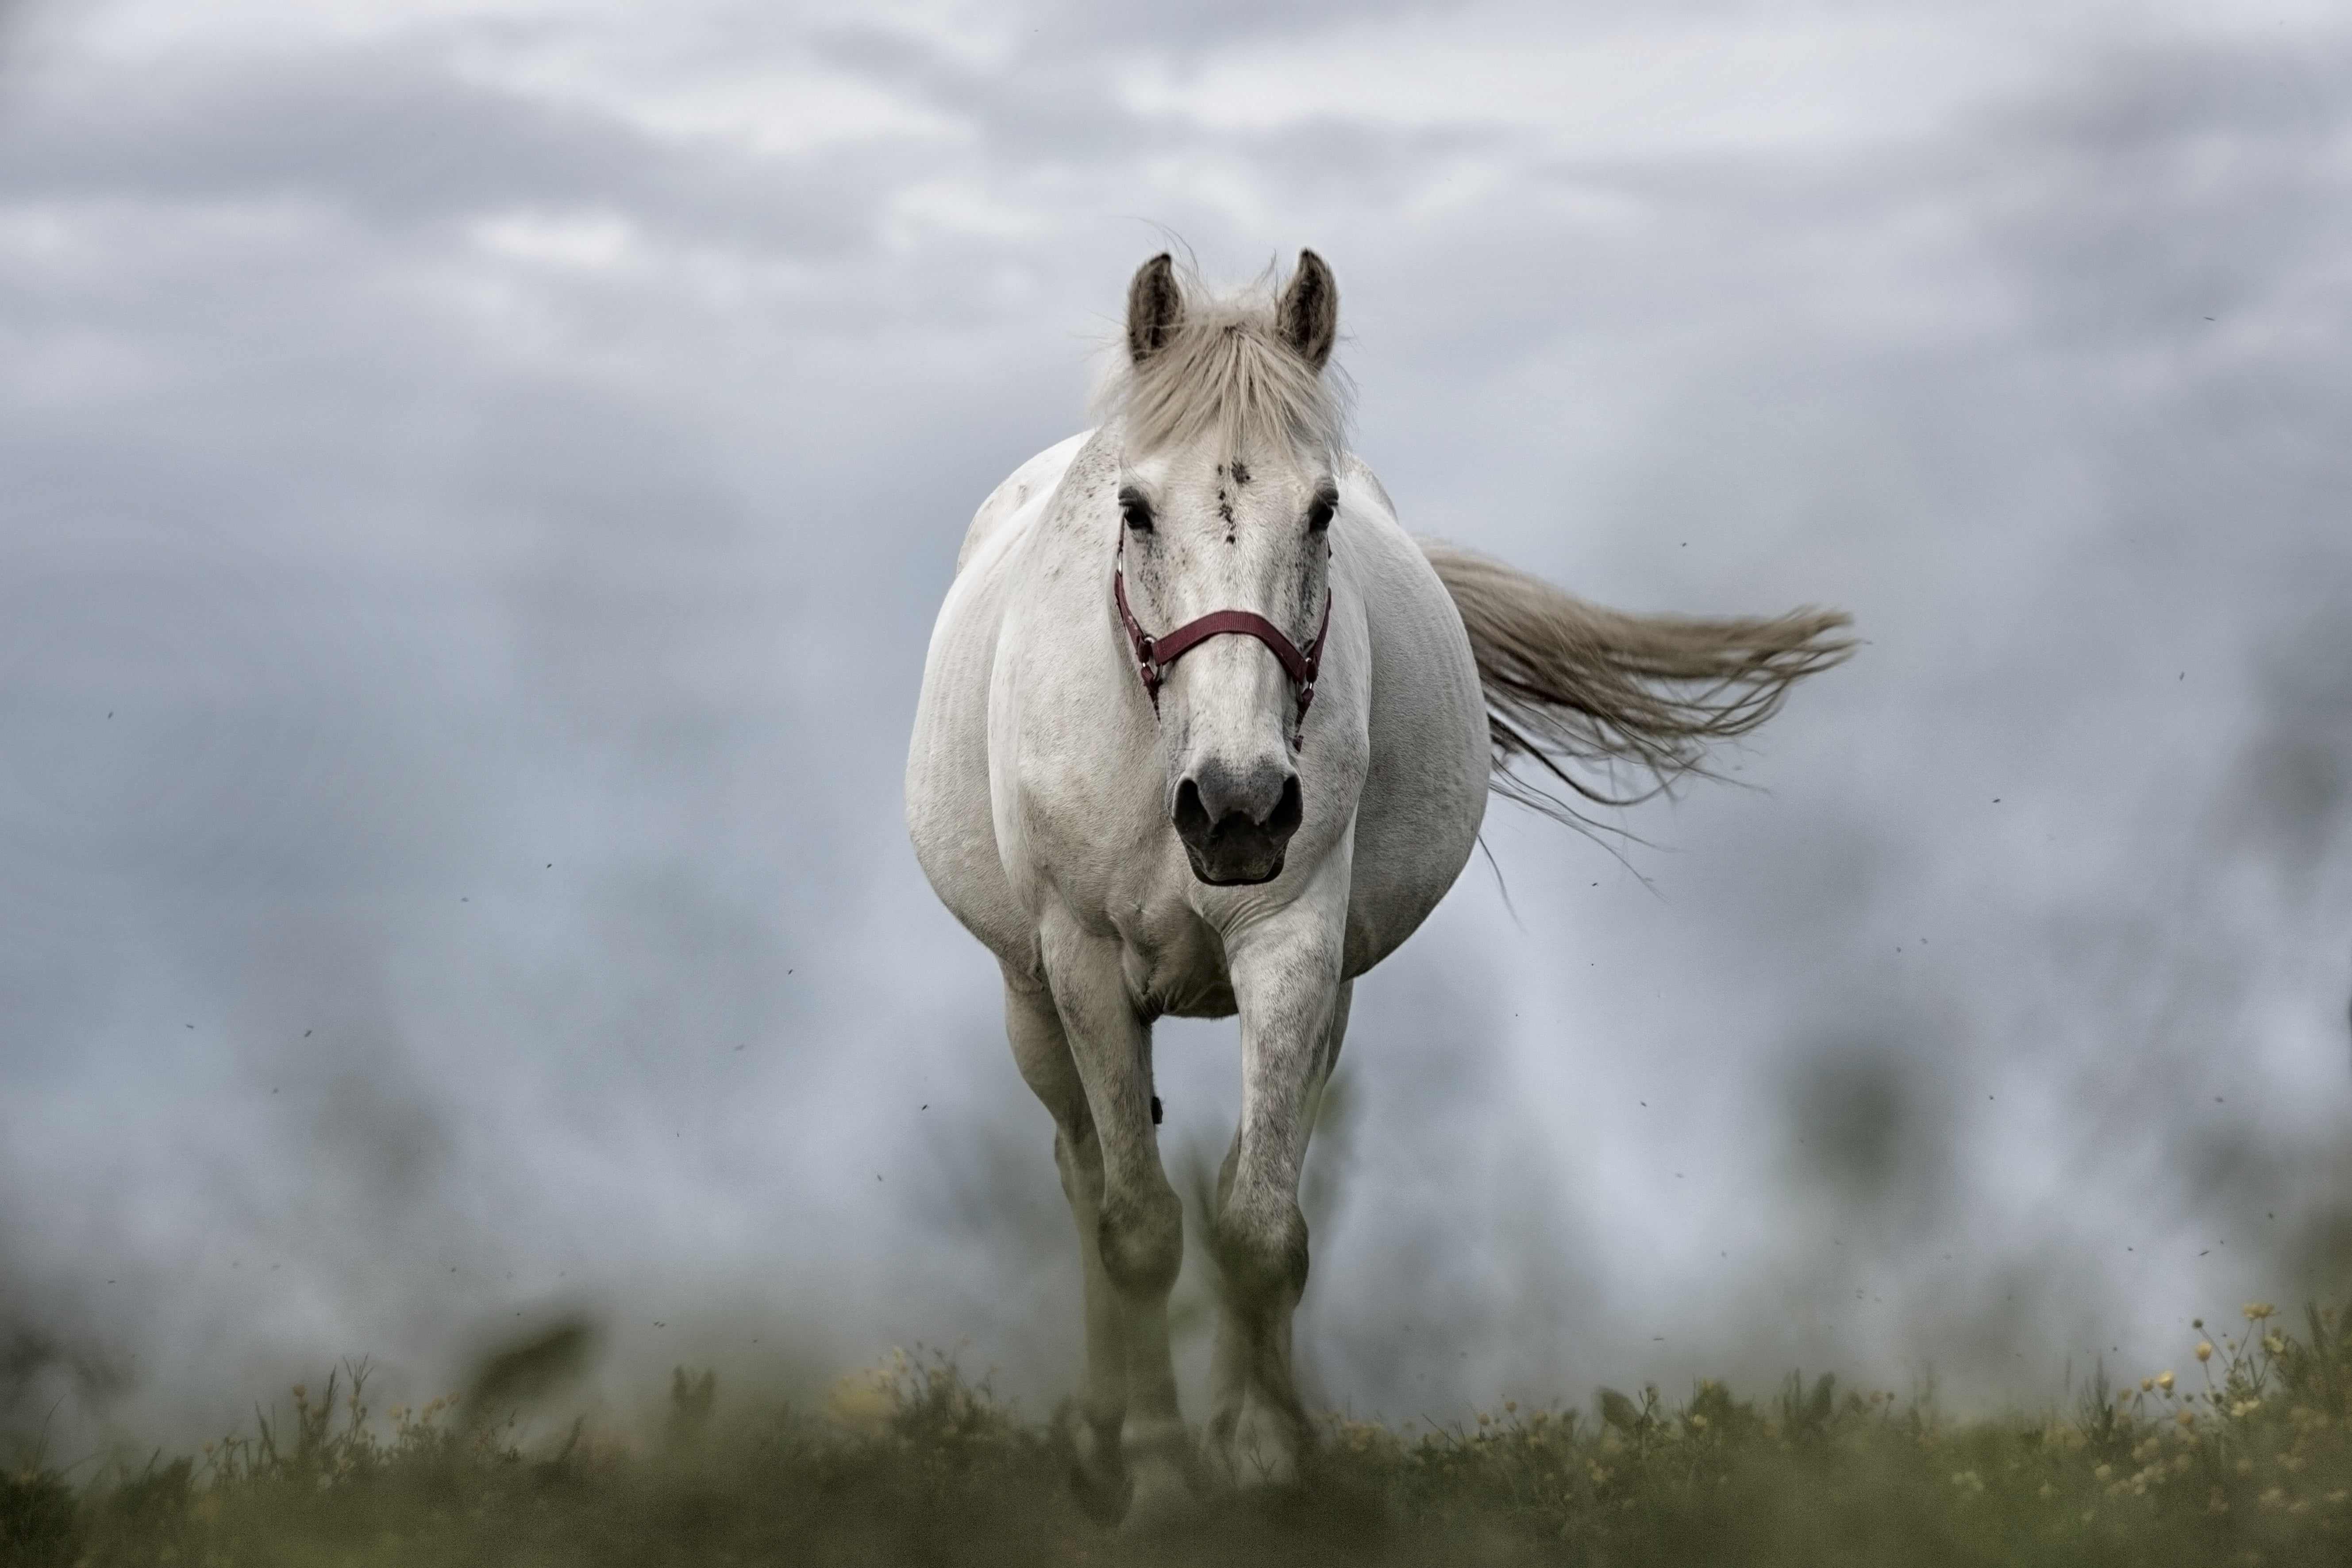 httpswhite horse running on grass field wallpaper 25937